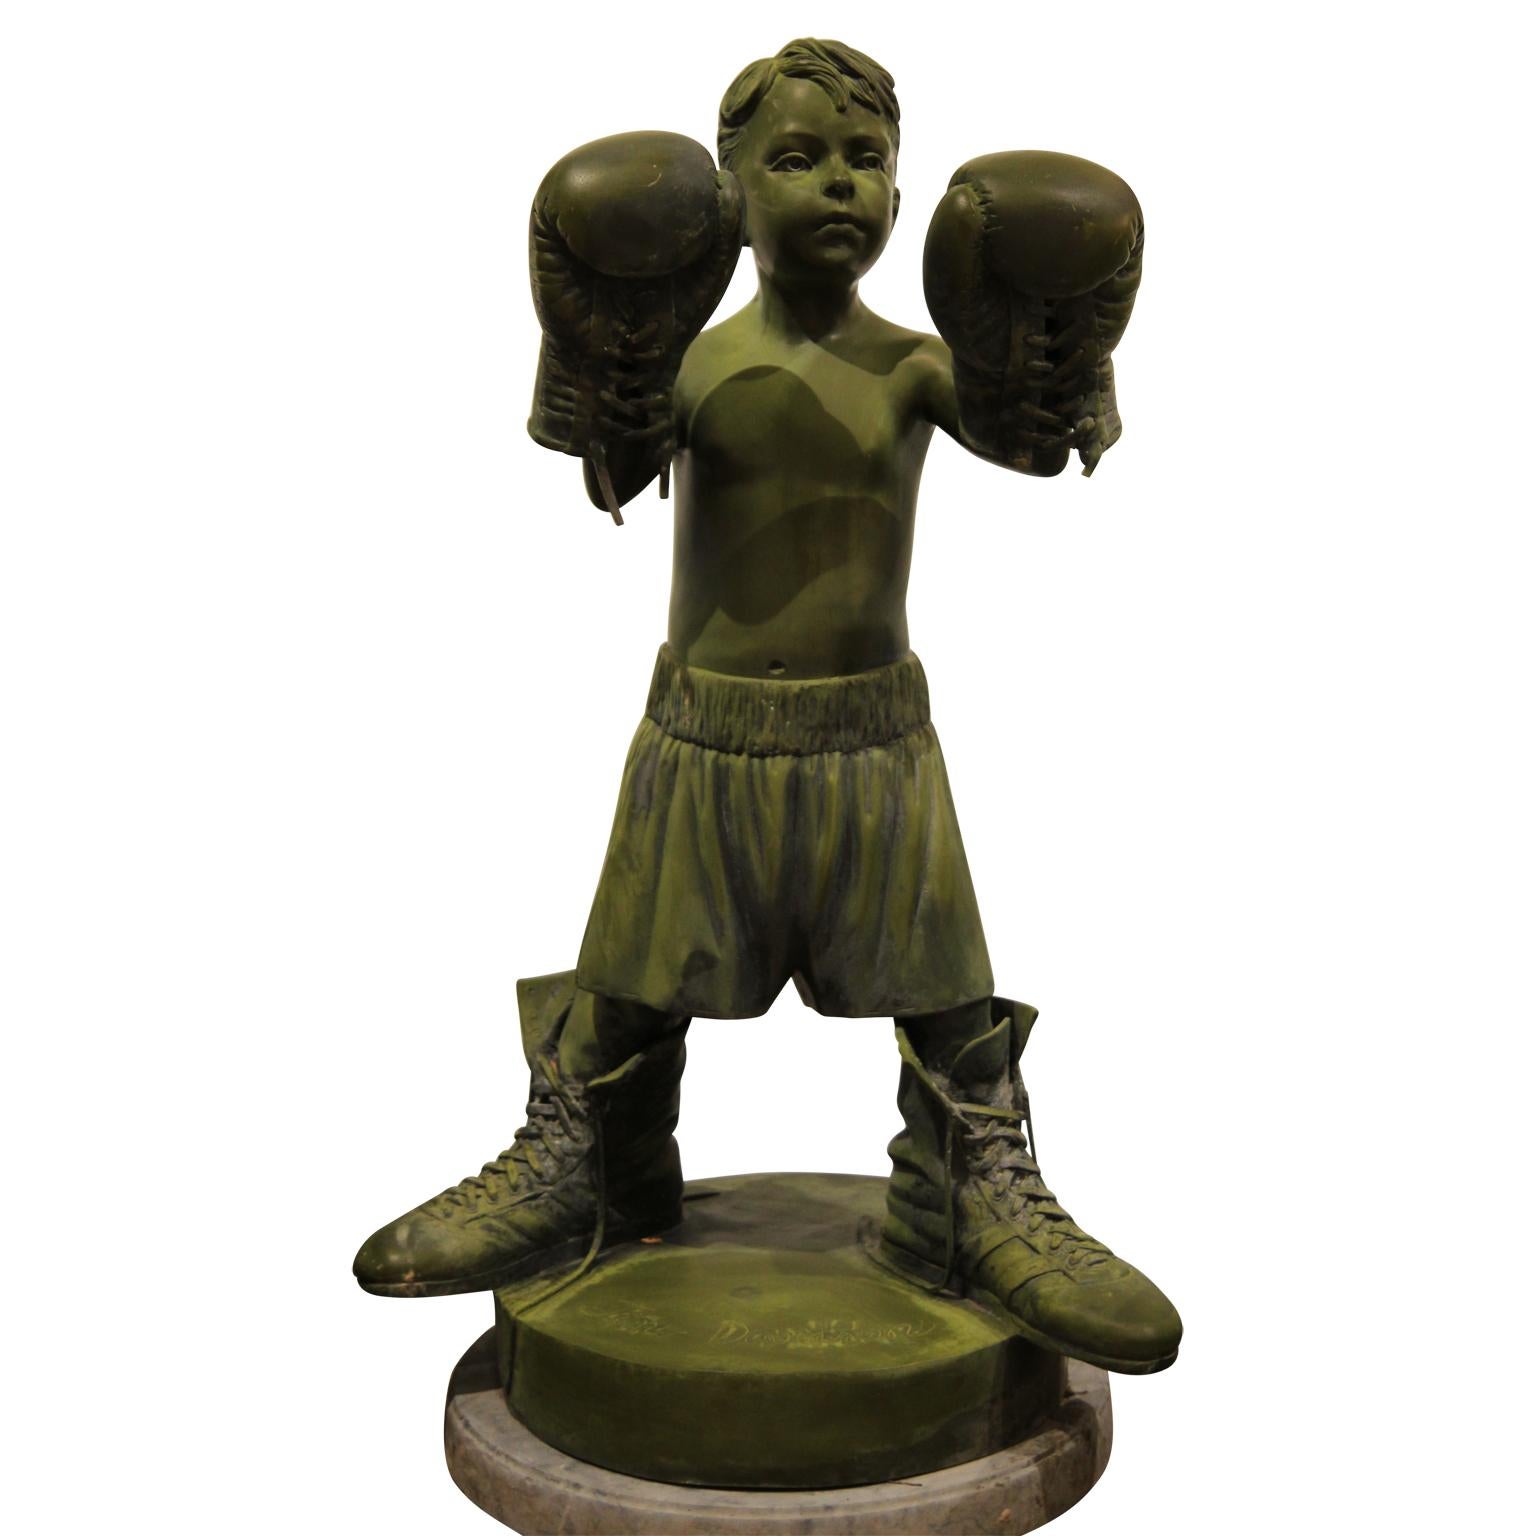 Jim Davidson Figurative Sculpture - "Boxing Boy" Large Naturalistic Bronze Sculpture